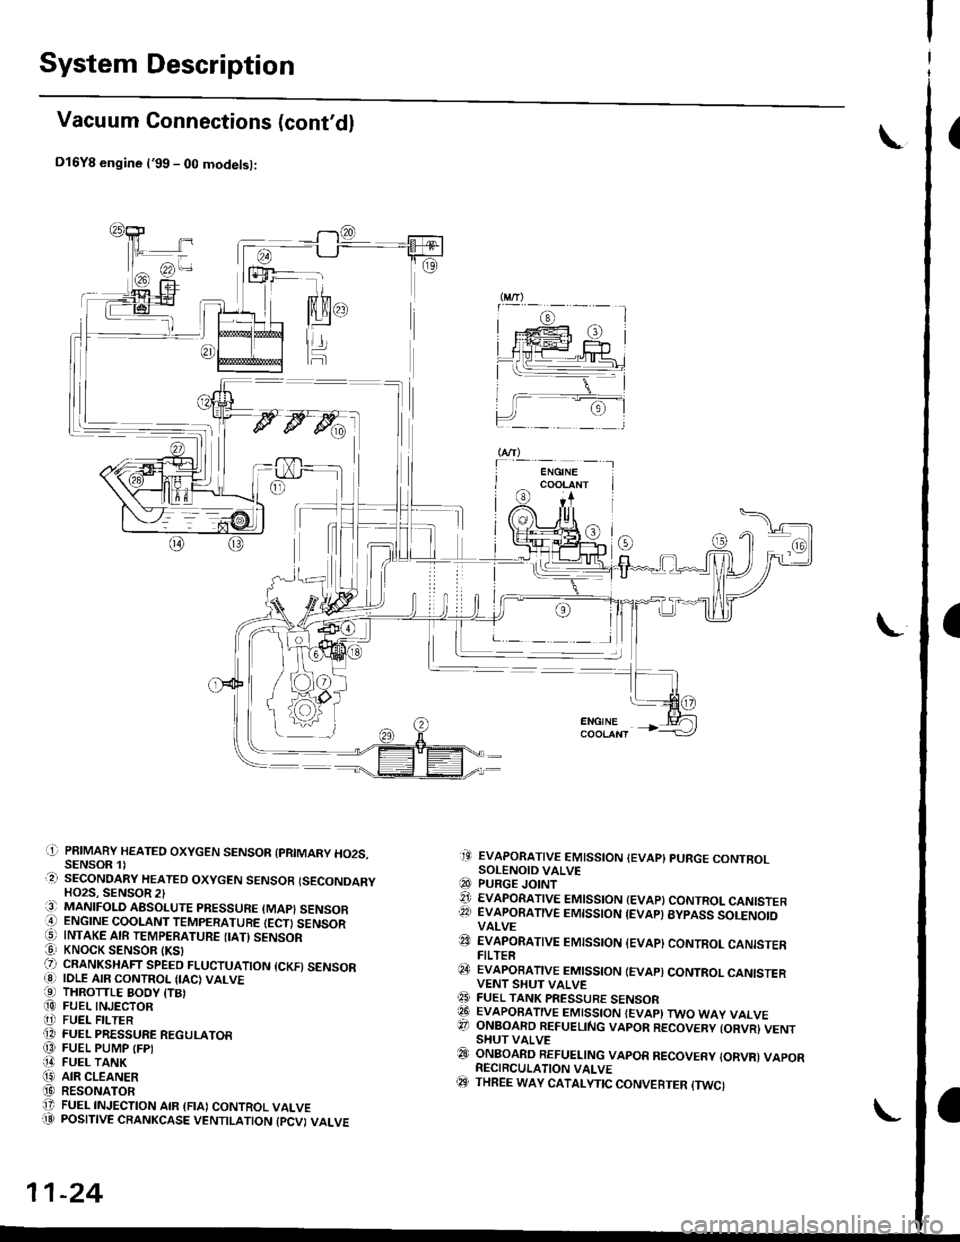 HONDA CIVIC 1997 6.G Owners Guide System Description
Vacuum Connections (contdl
D16Y8 engine l99 - 00 modetsl:
(]-i PAIMARY HEATEO OXYGEN SENSOR {PRIMARY HO2S,SENSOR 1)..2r SECONOARY HEATEO OXycEN SENSOB ISECONDARYHO2S, SENSOR 2li3)